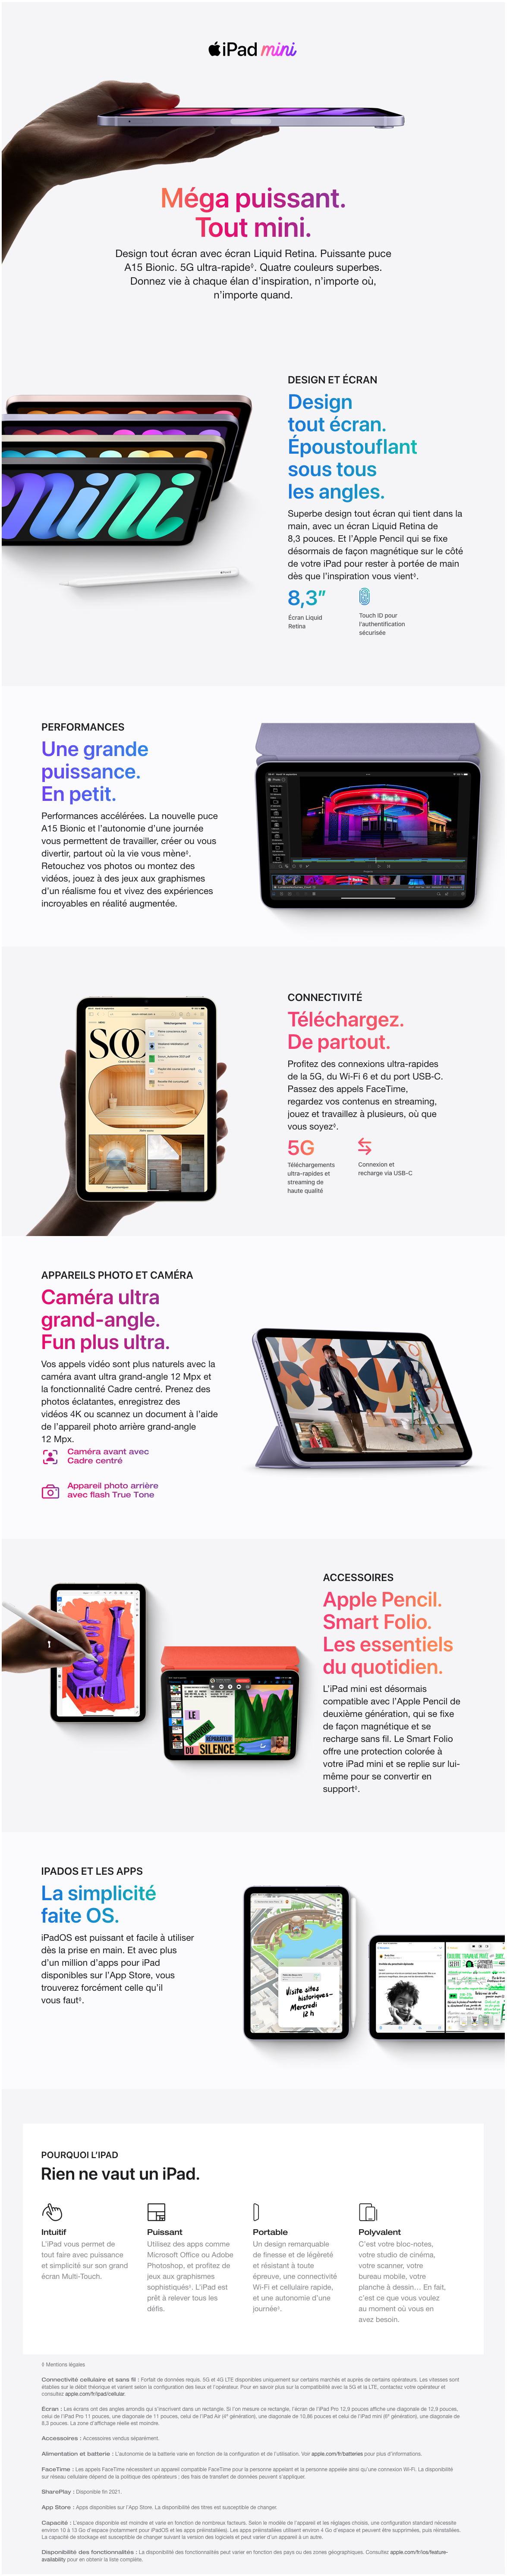 Apple iPad Air (2022) Wi-Fi 64 Go Rose - Tablette tactile - Garantie 3 ans  LDLC